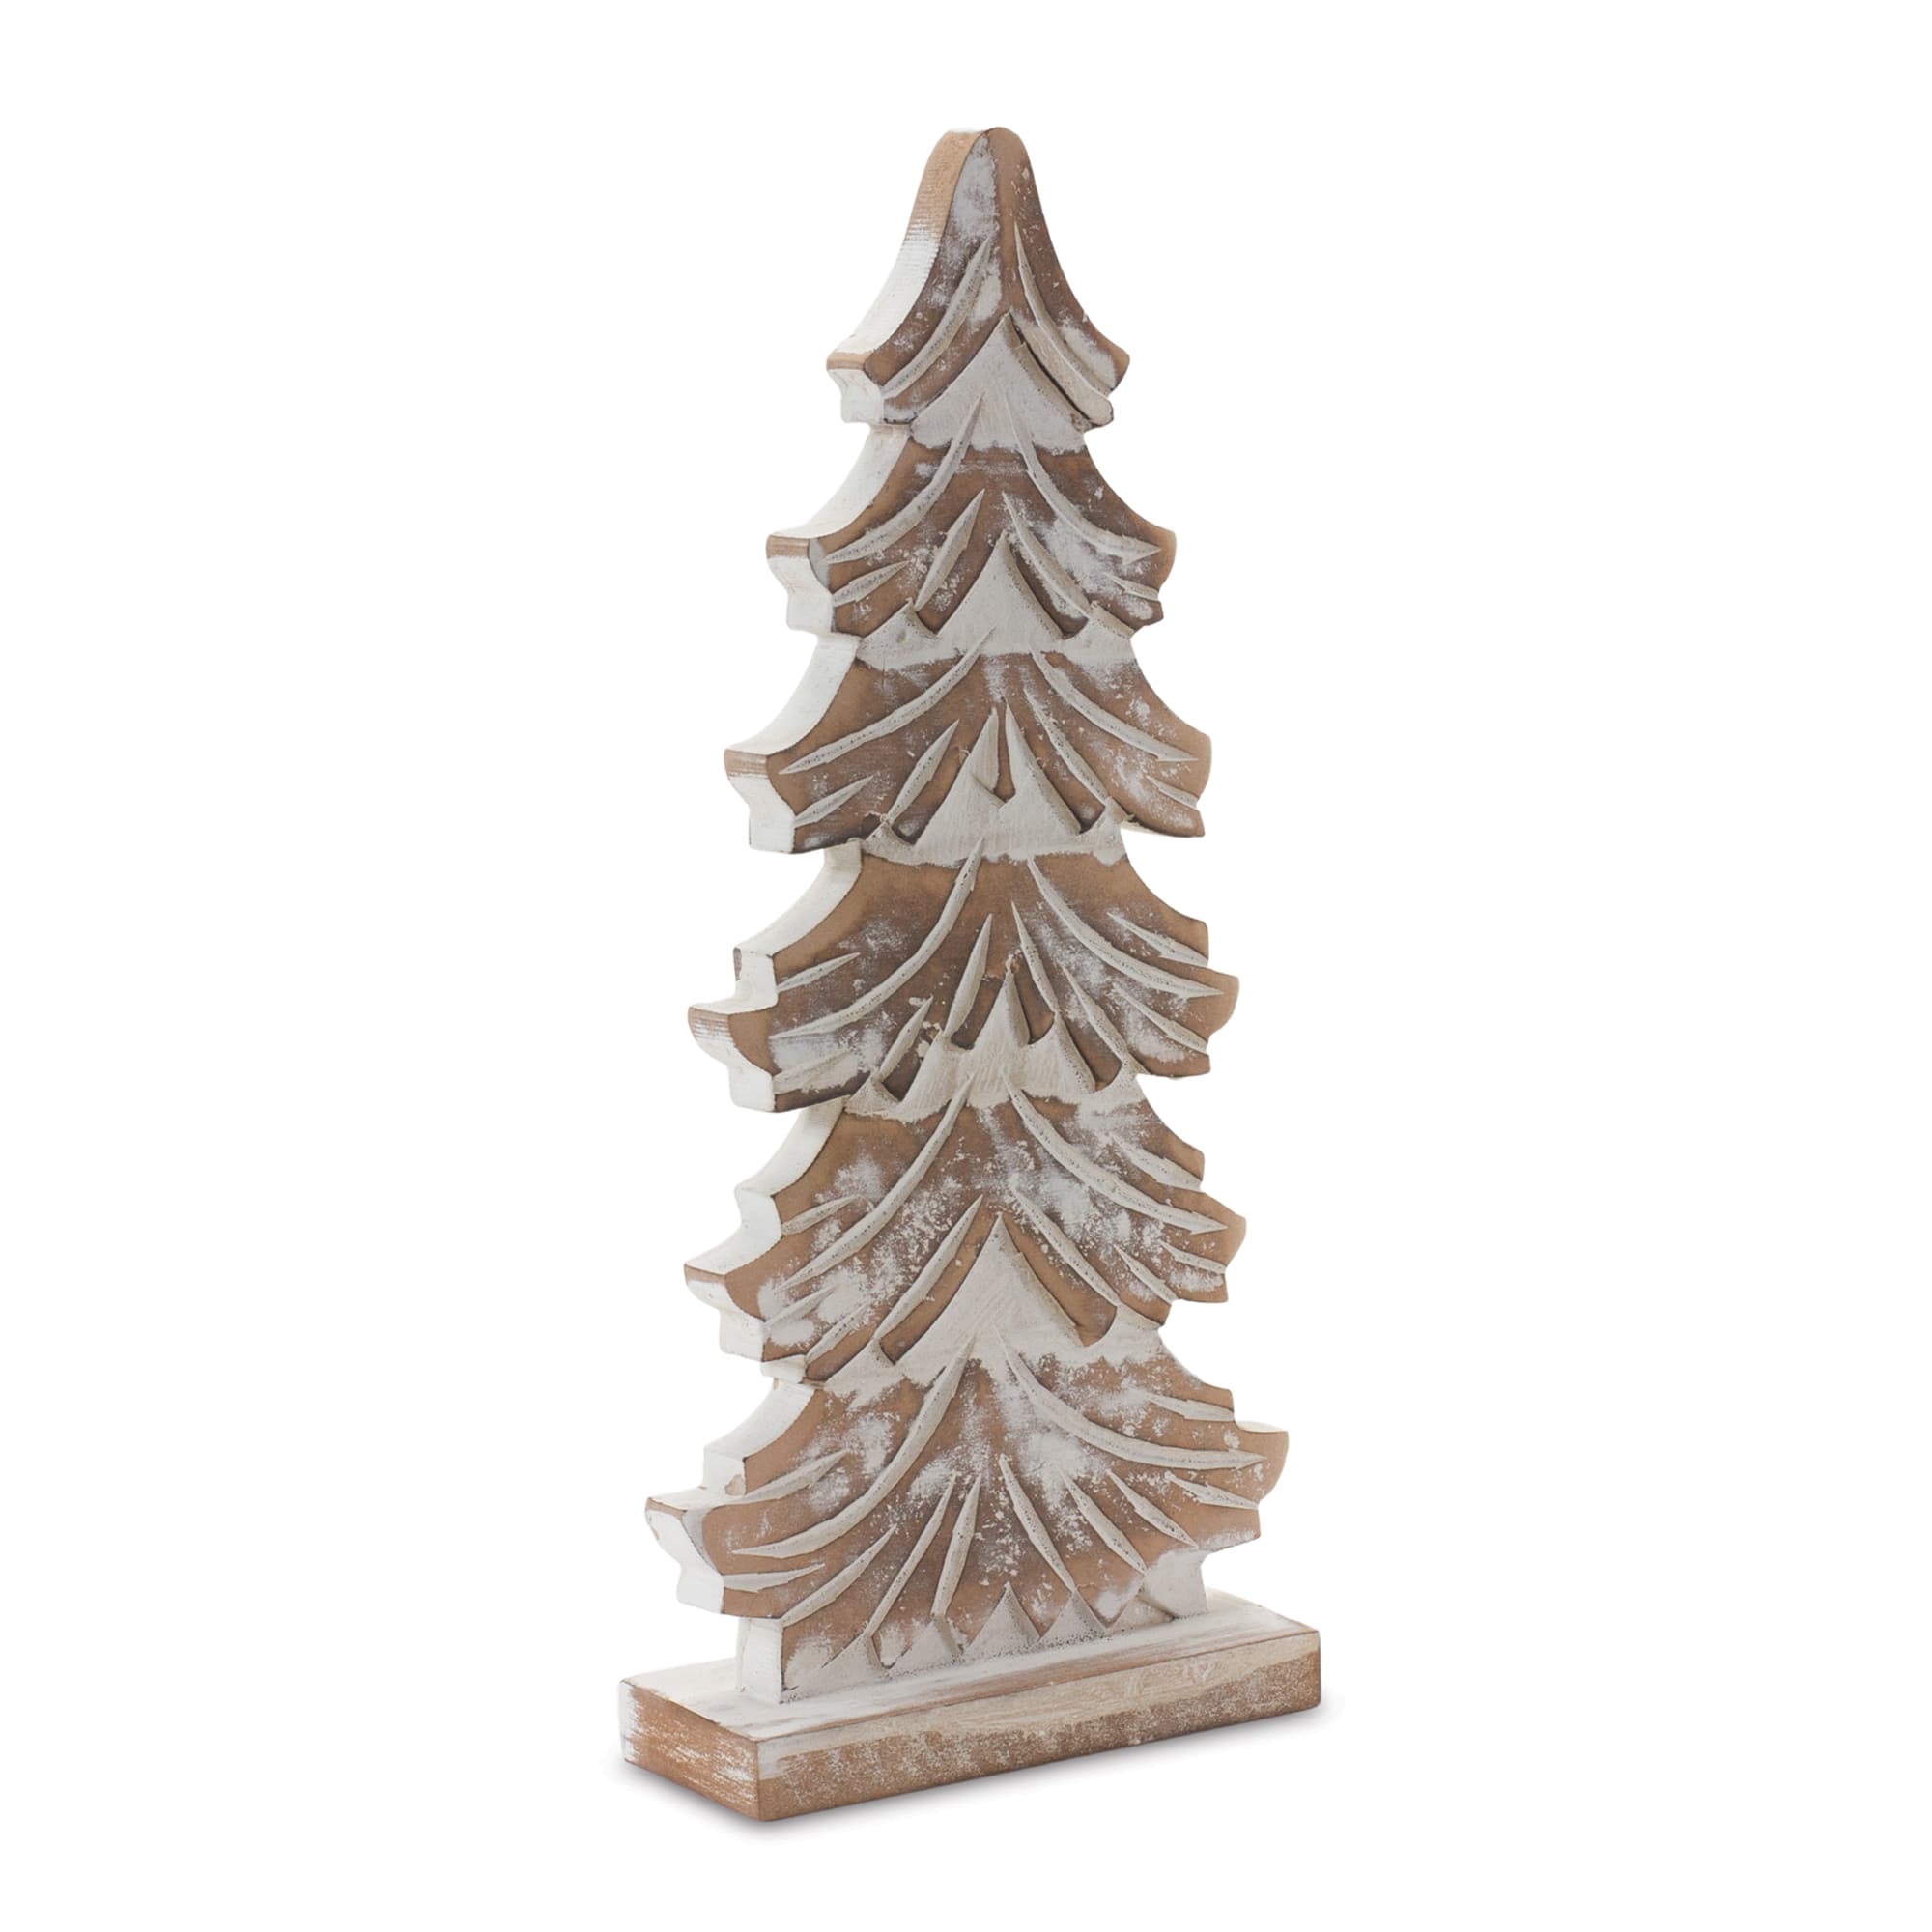 Carved Pine Tree Set